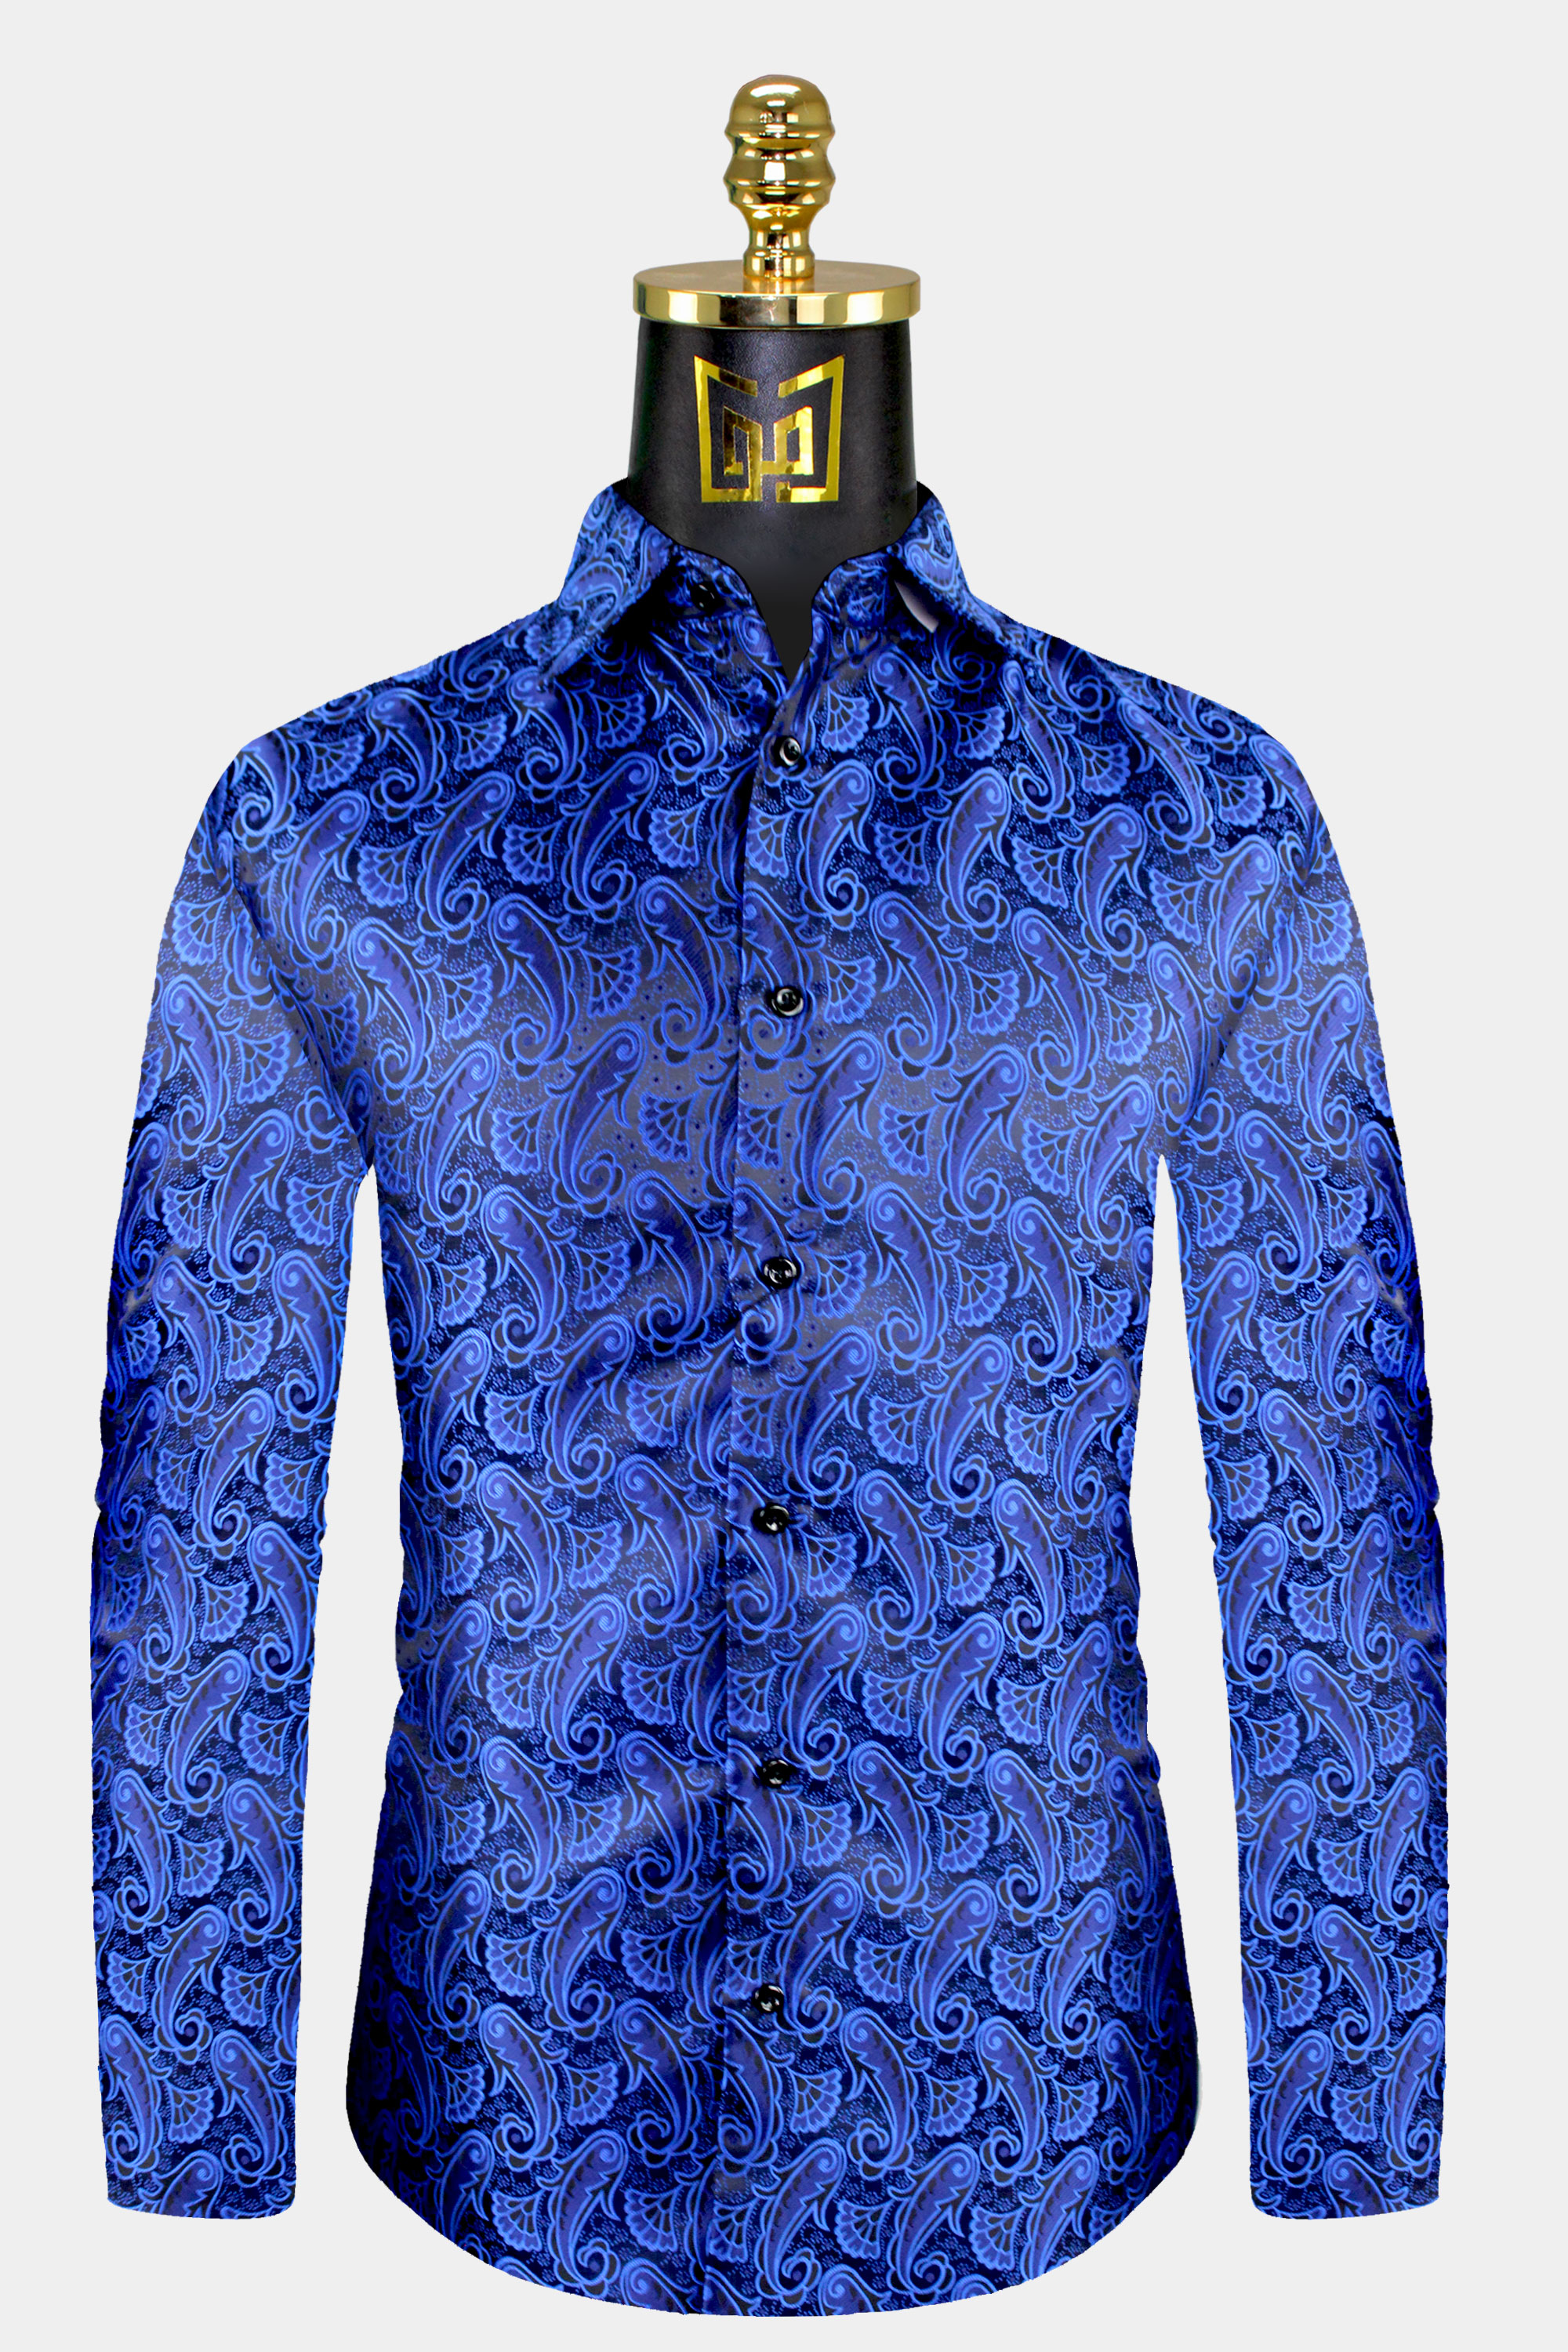 Mens-Royal-Blue-and-Black-Shirt-Paisley-Floral-Dress-Shirt-For-Men-from-Gentlemansguru.com